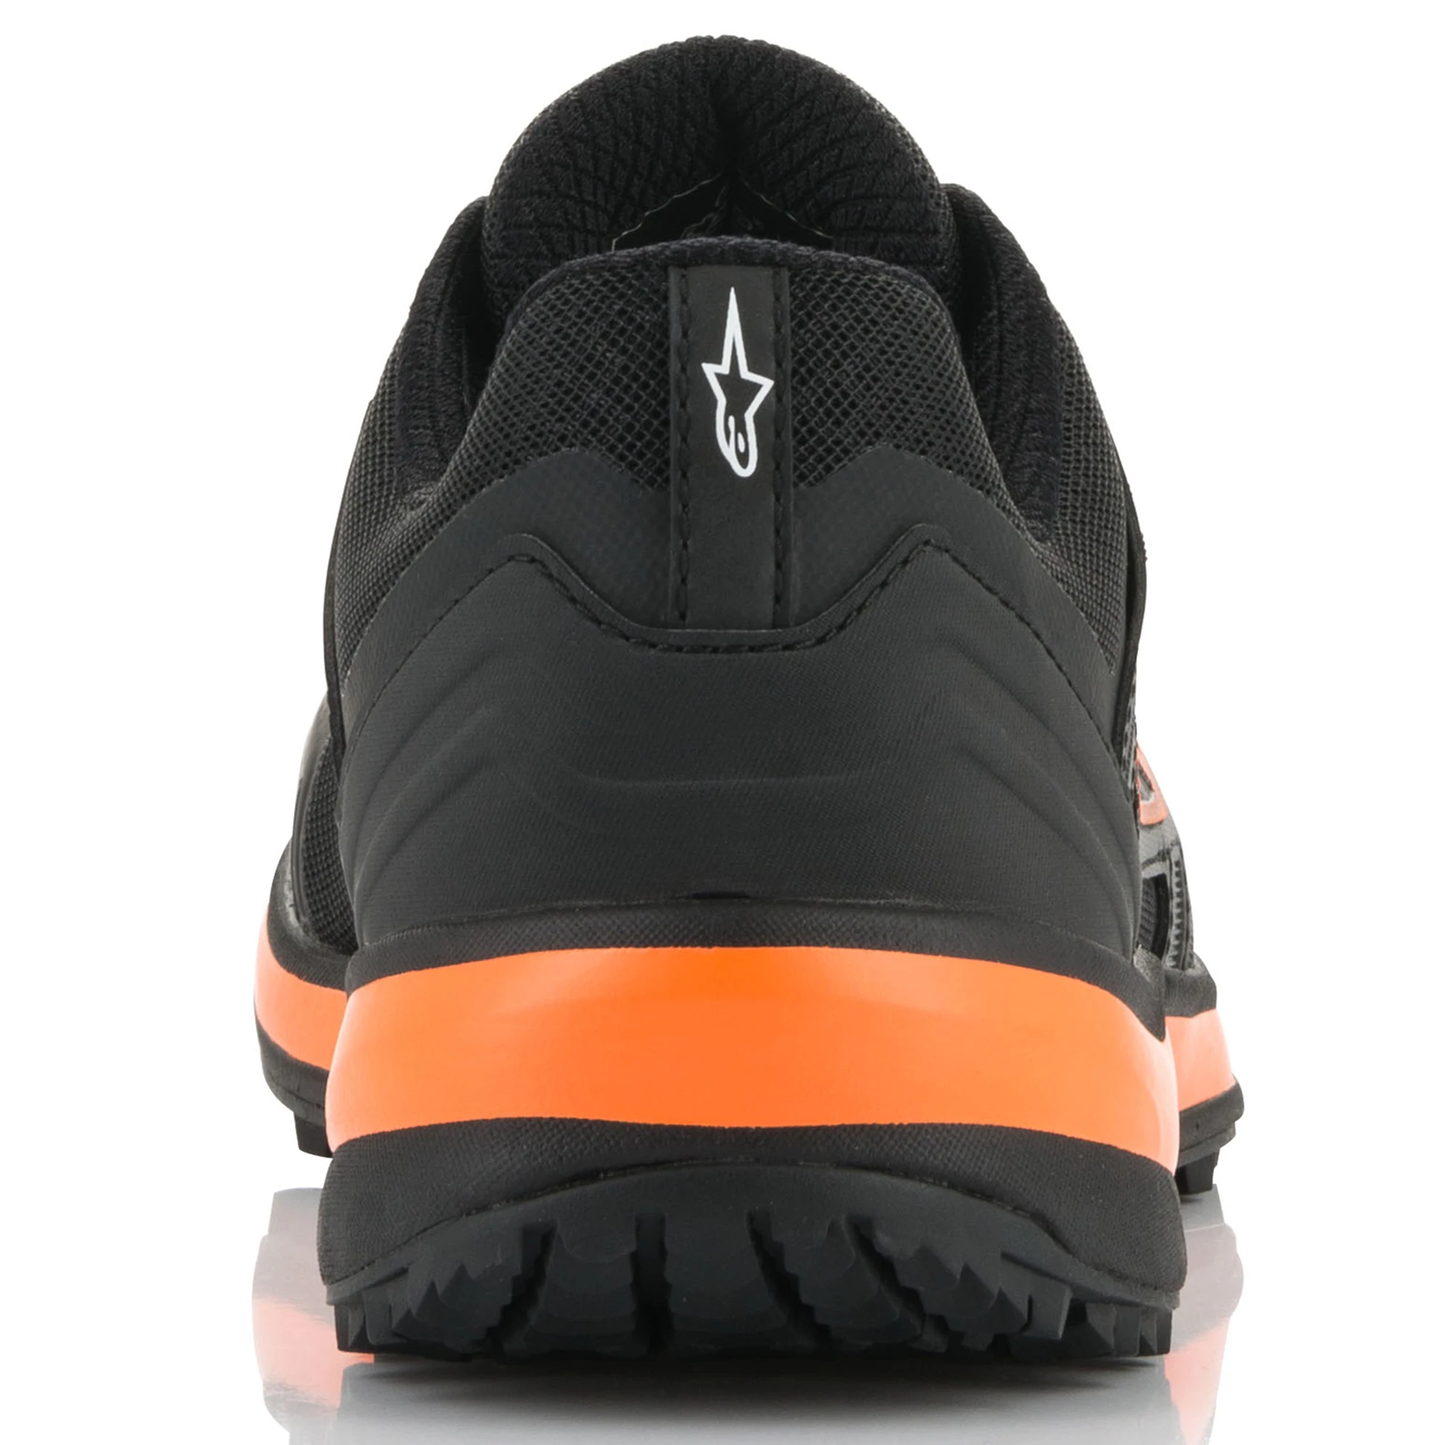 Alpinestars Meta Trail Shoes - Black/Orange